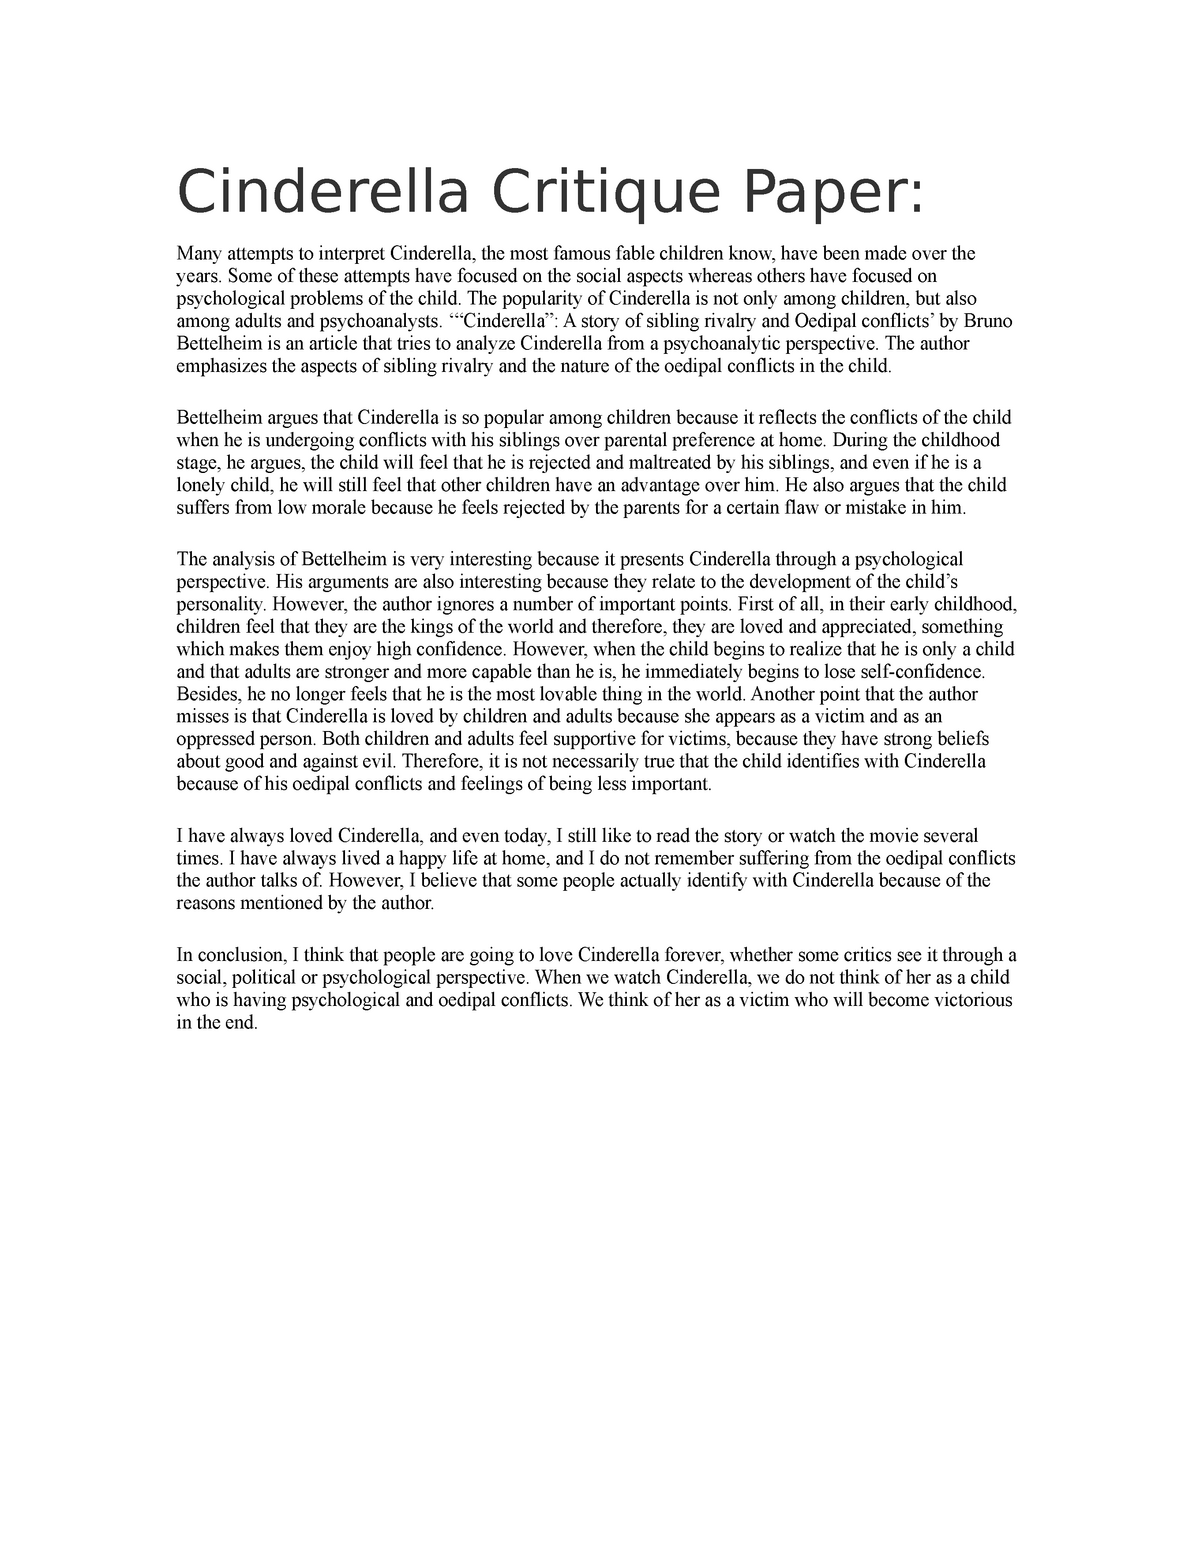 short book review of cinderella